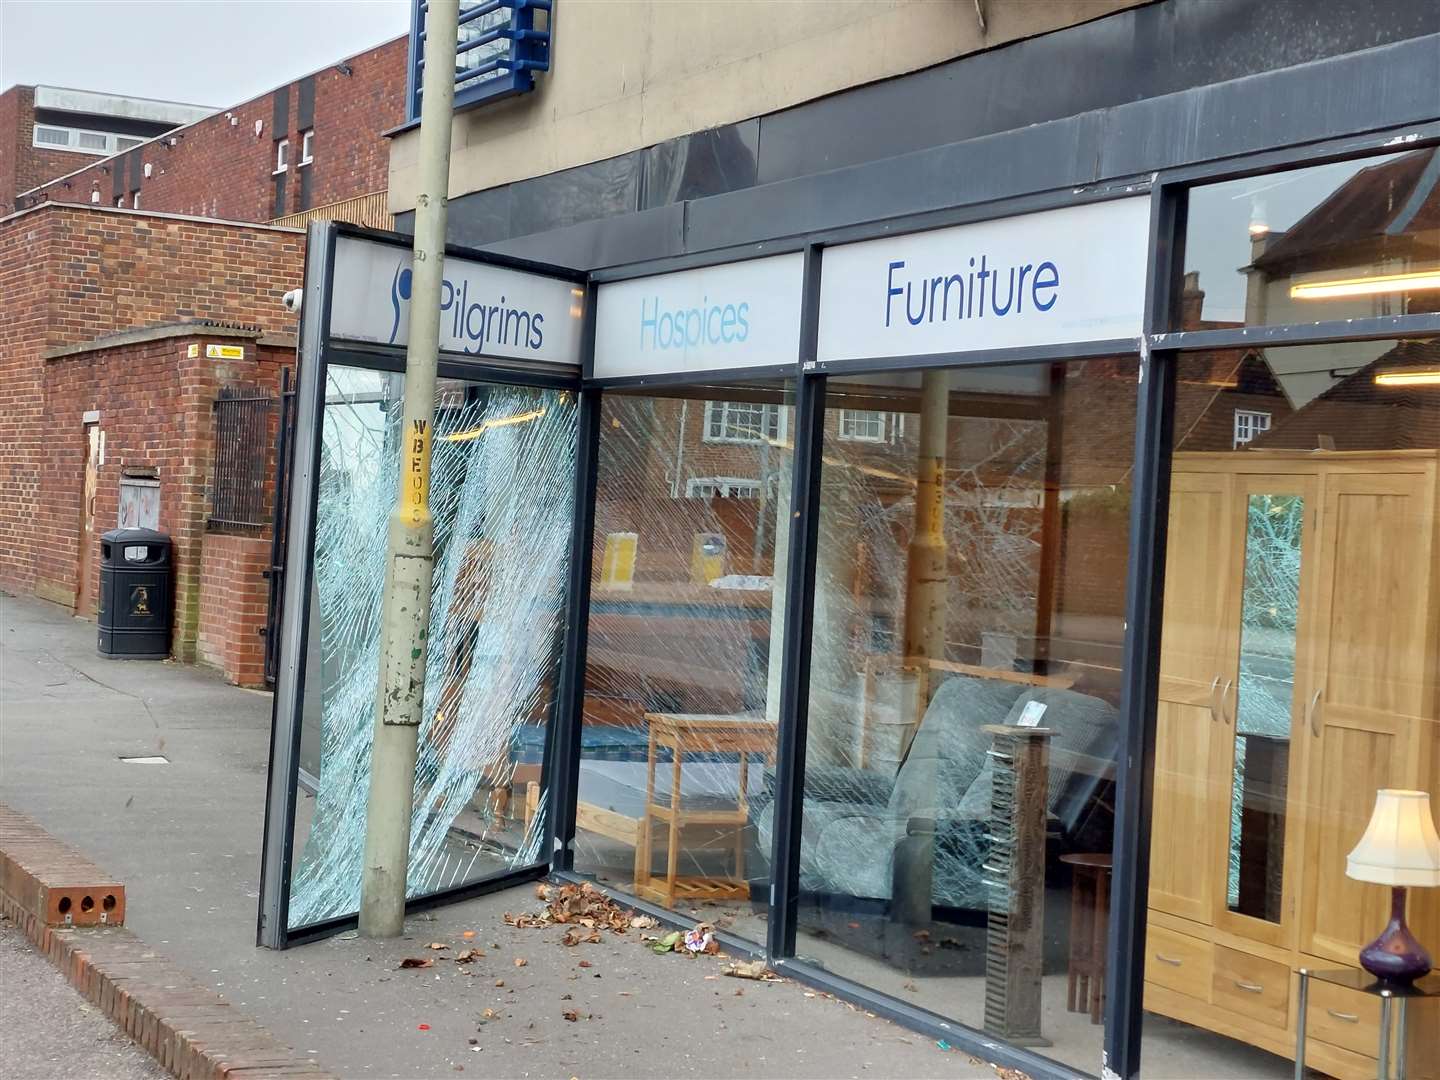 Pilgrims Hospice furniture store in Ashford suffered severe damage